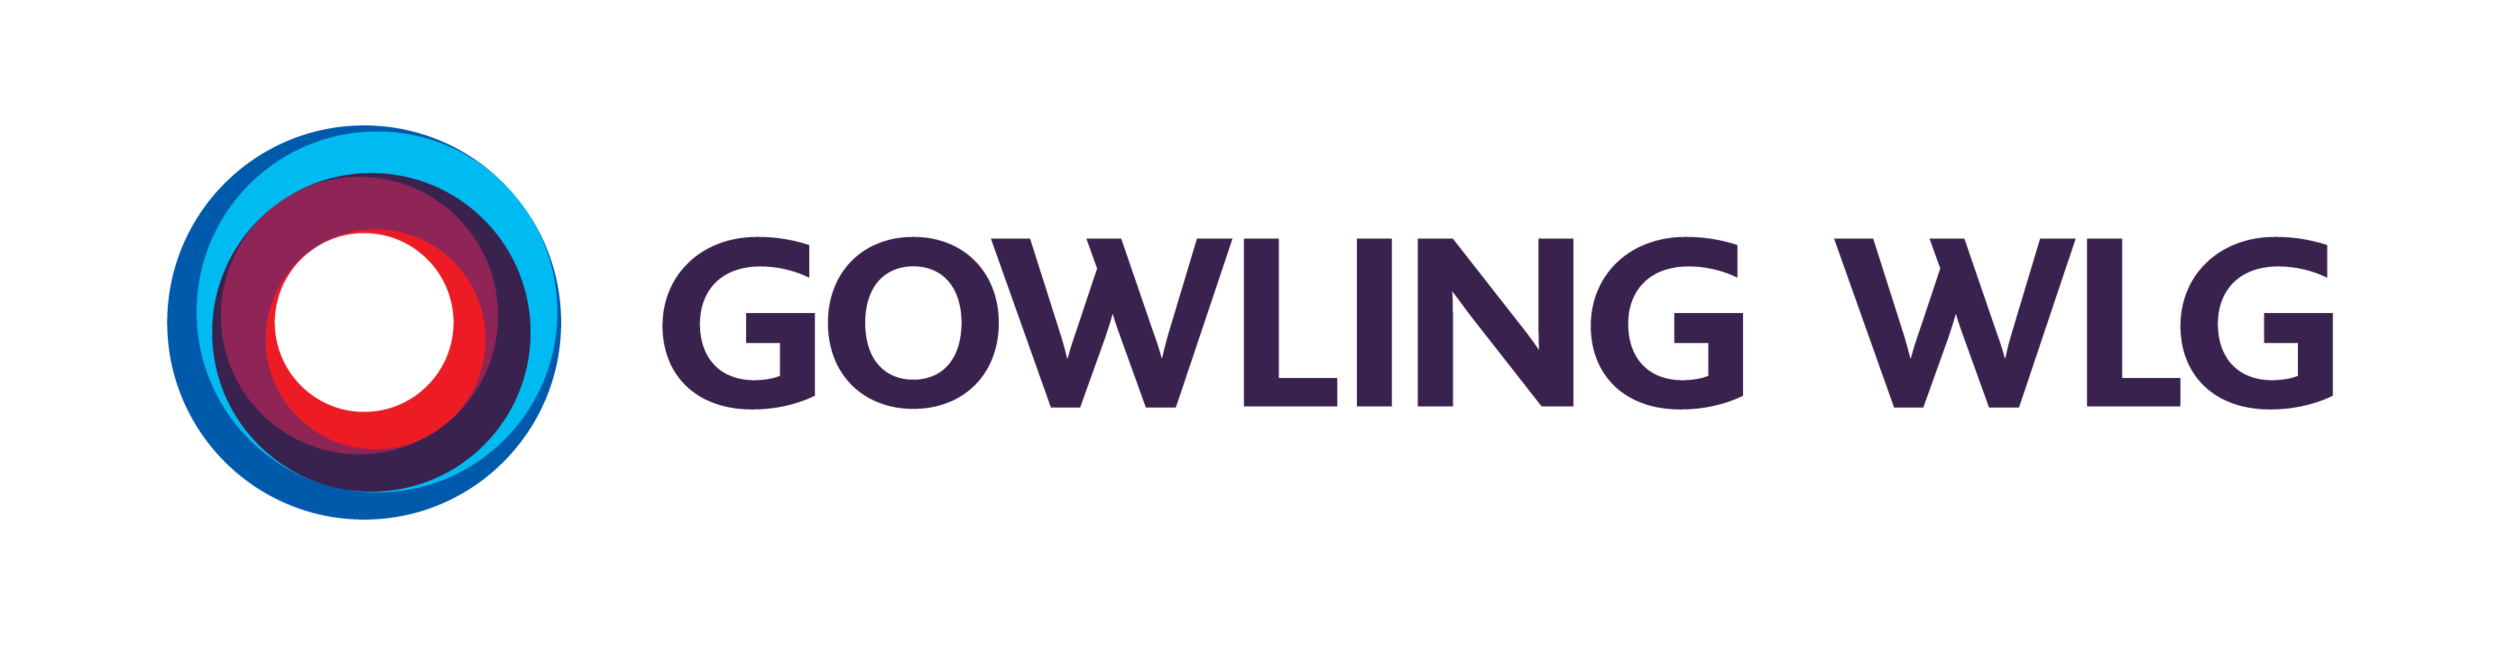 gowling-wlg-logo.png